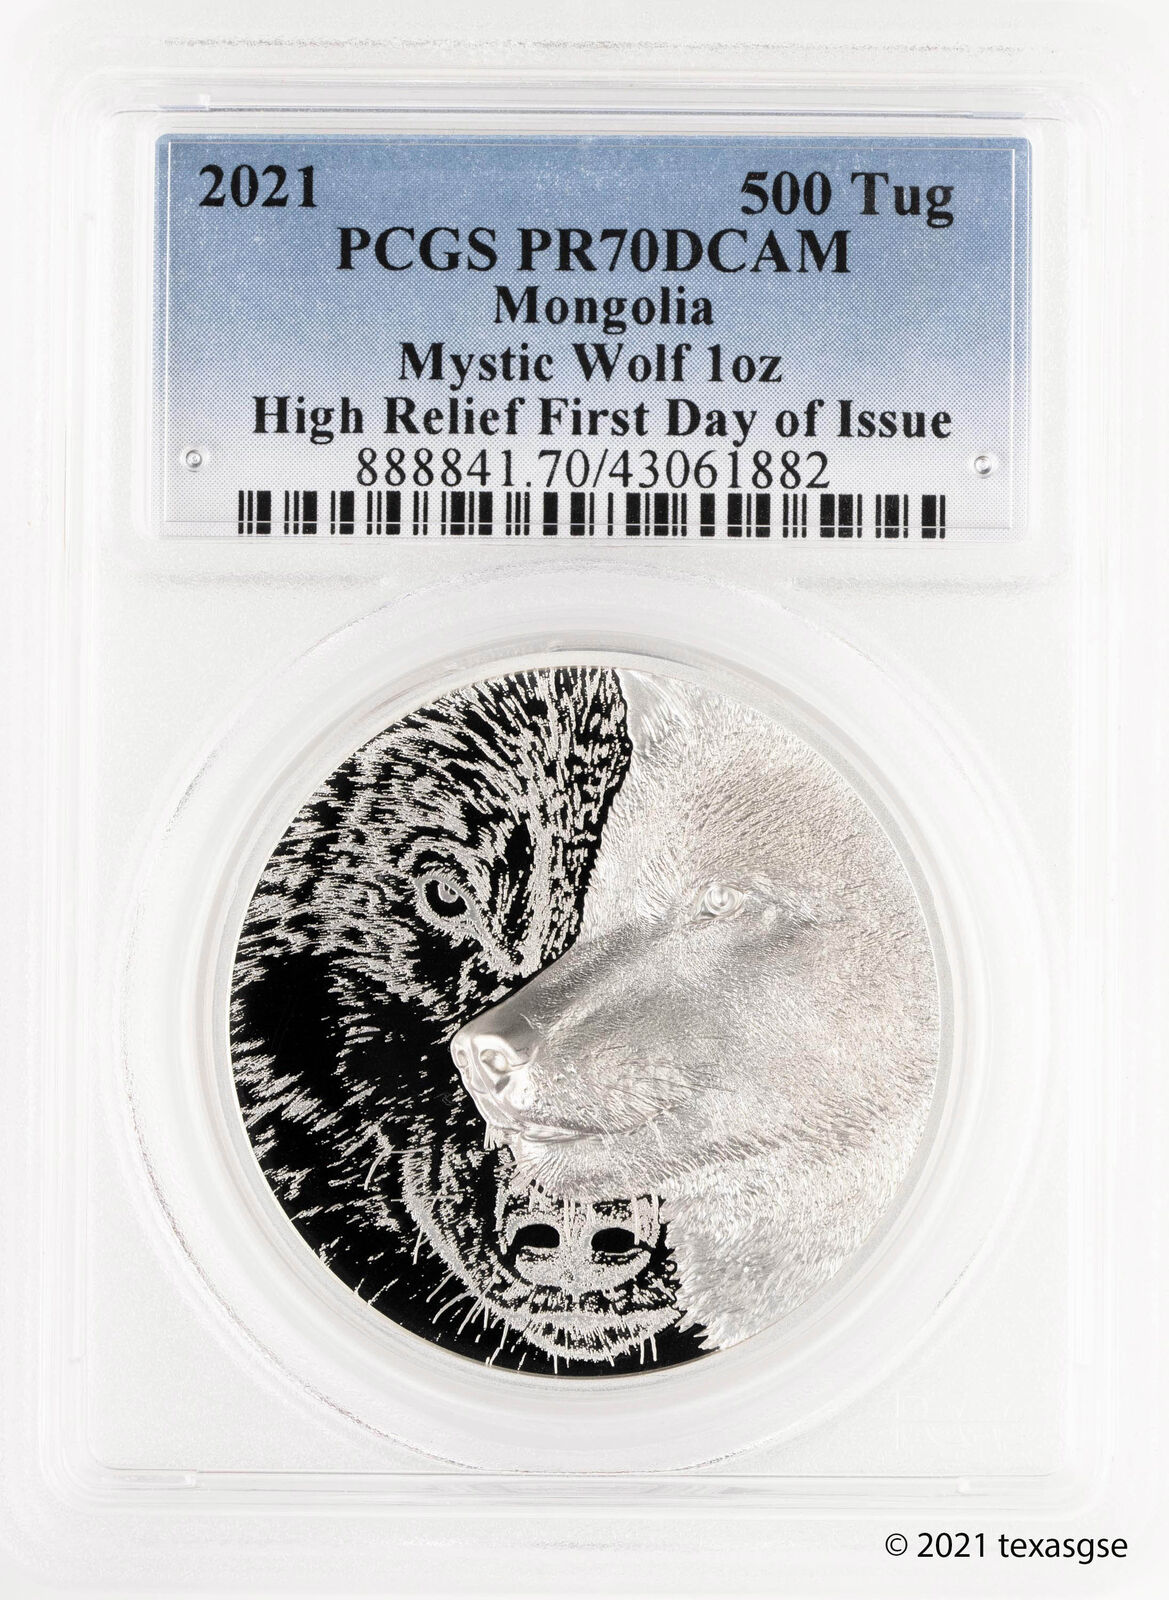 2021 Mongolia 500 Togrog 1oz Silver Mystic Wolf Coin Fdi - Pcgs Pr70